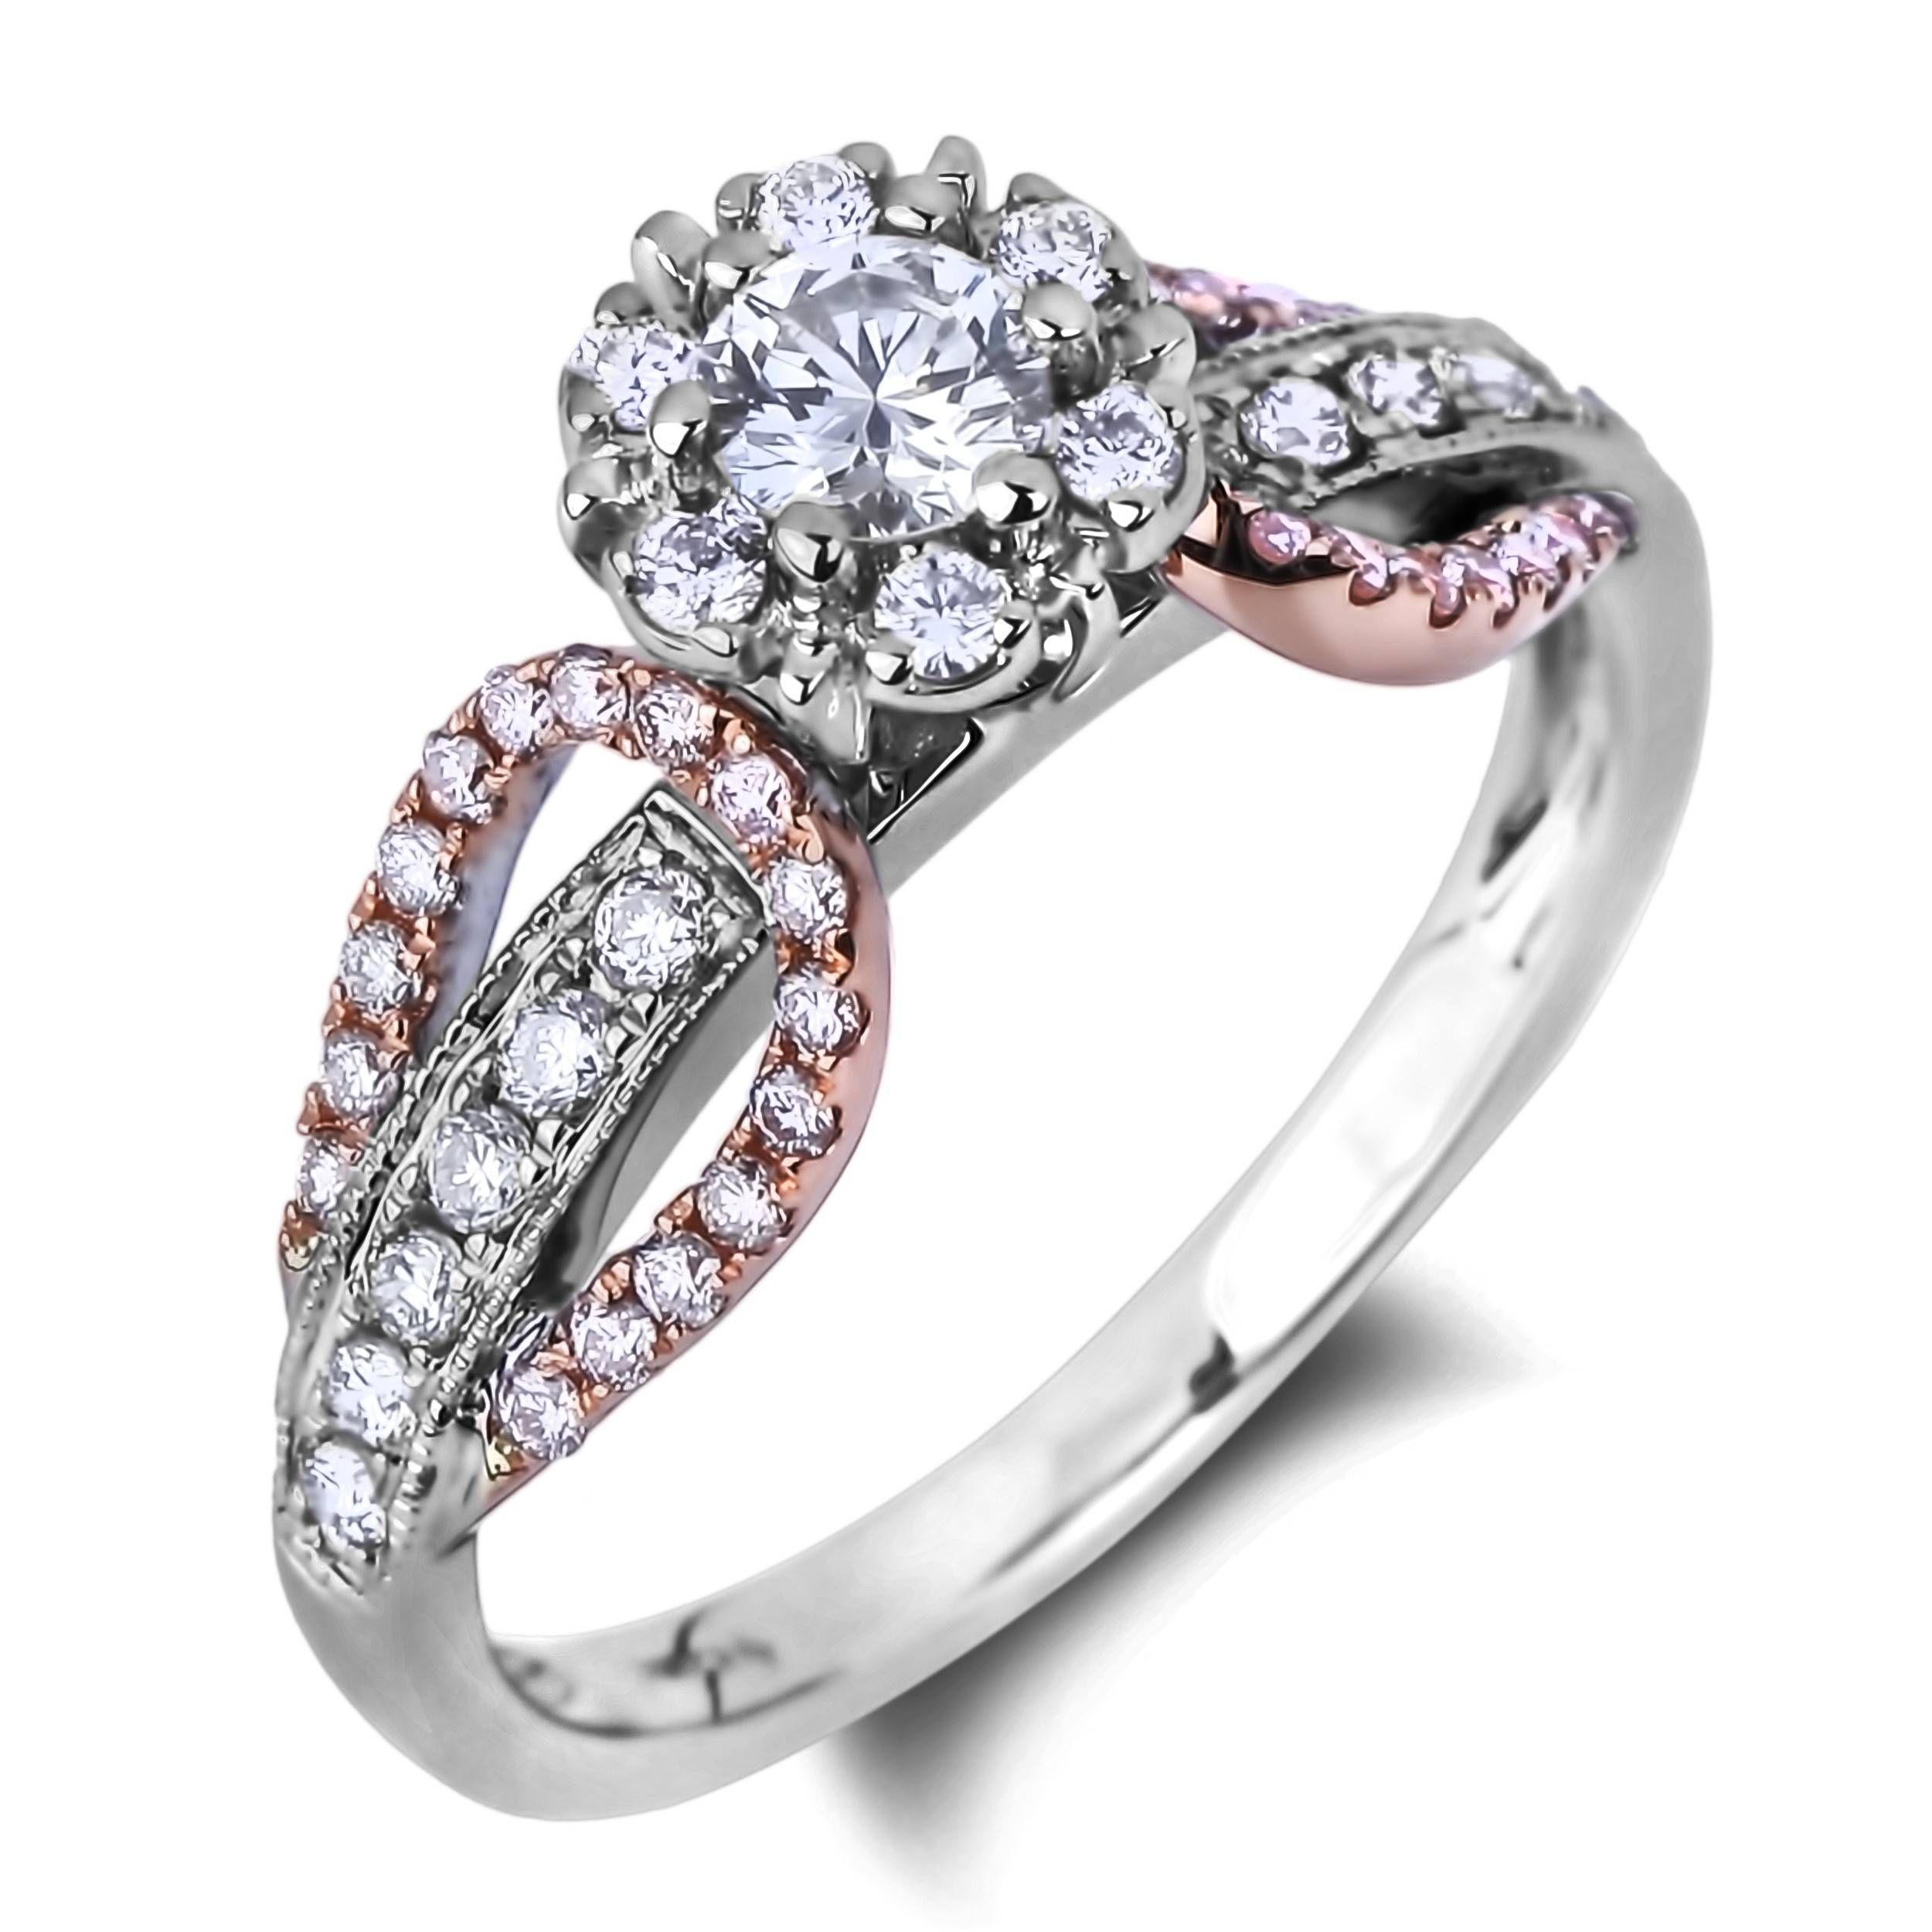 Ring Wedding Rings Gold For Women Wedding Rings Uk Custom Western Regarding Western Wedding Rings For Women (View 2 of 15)